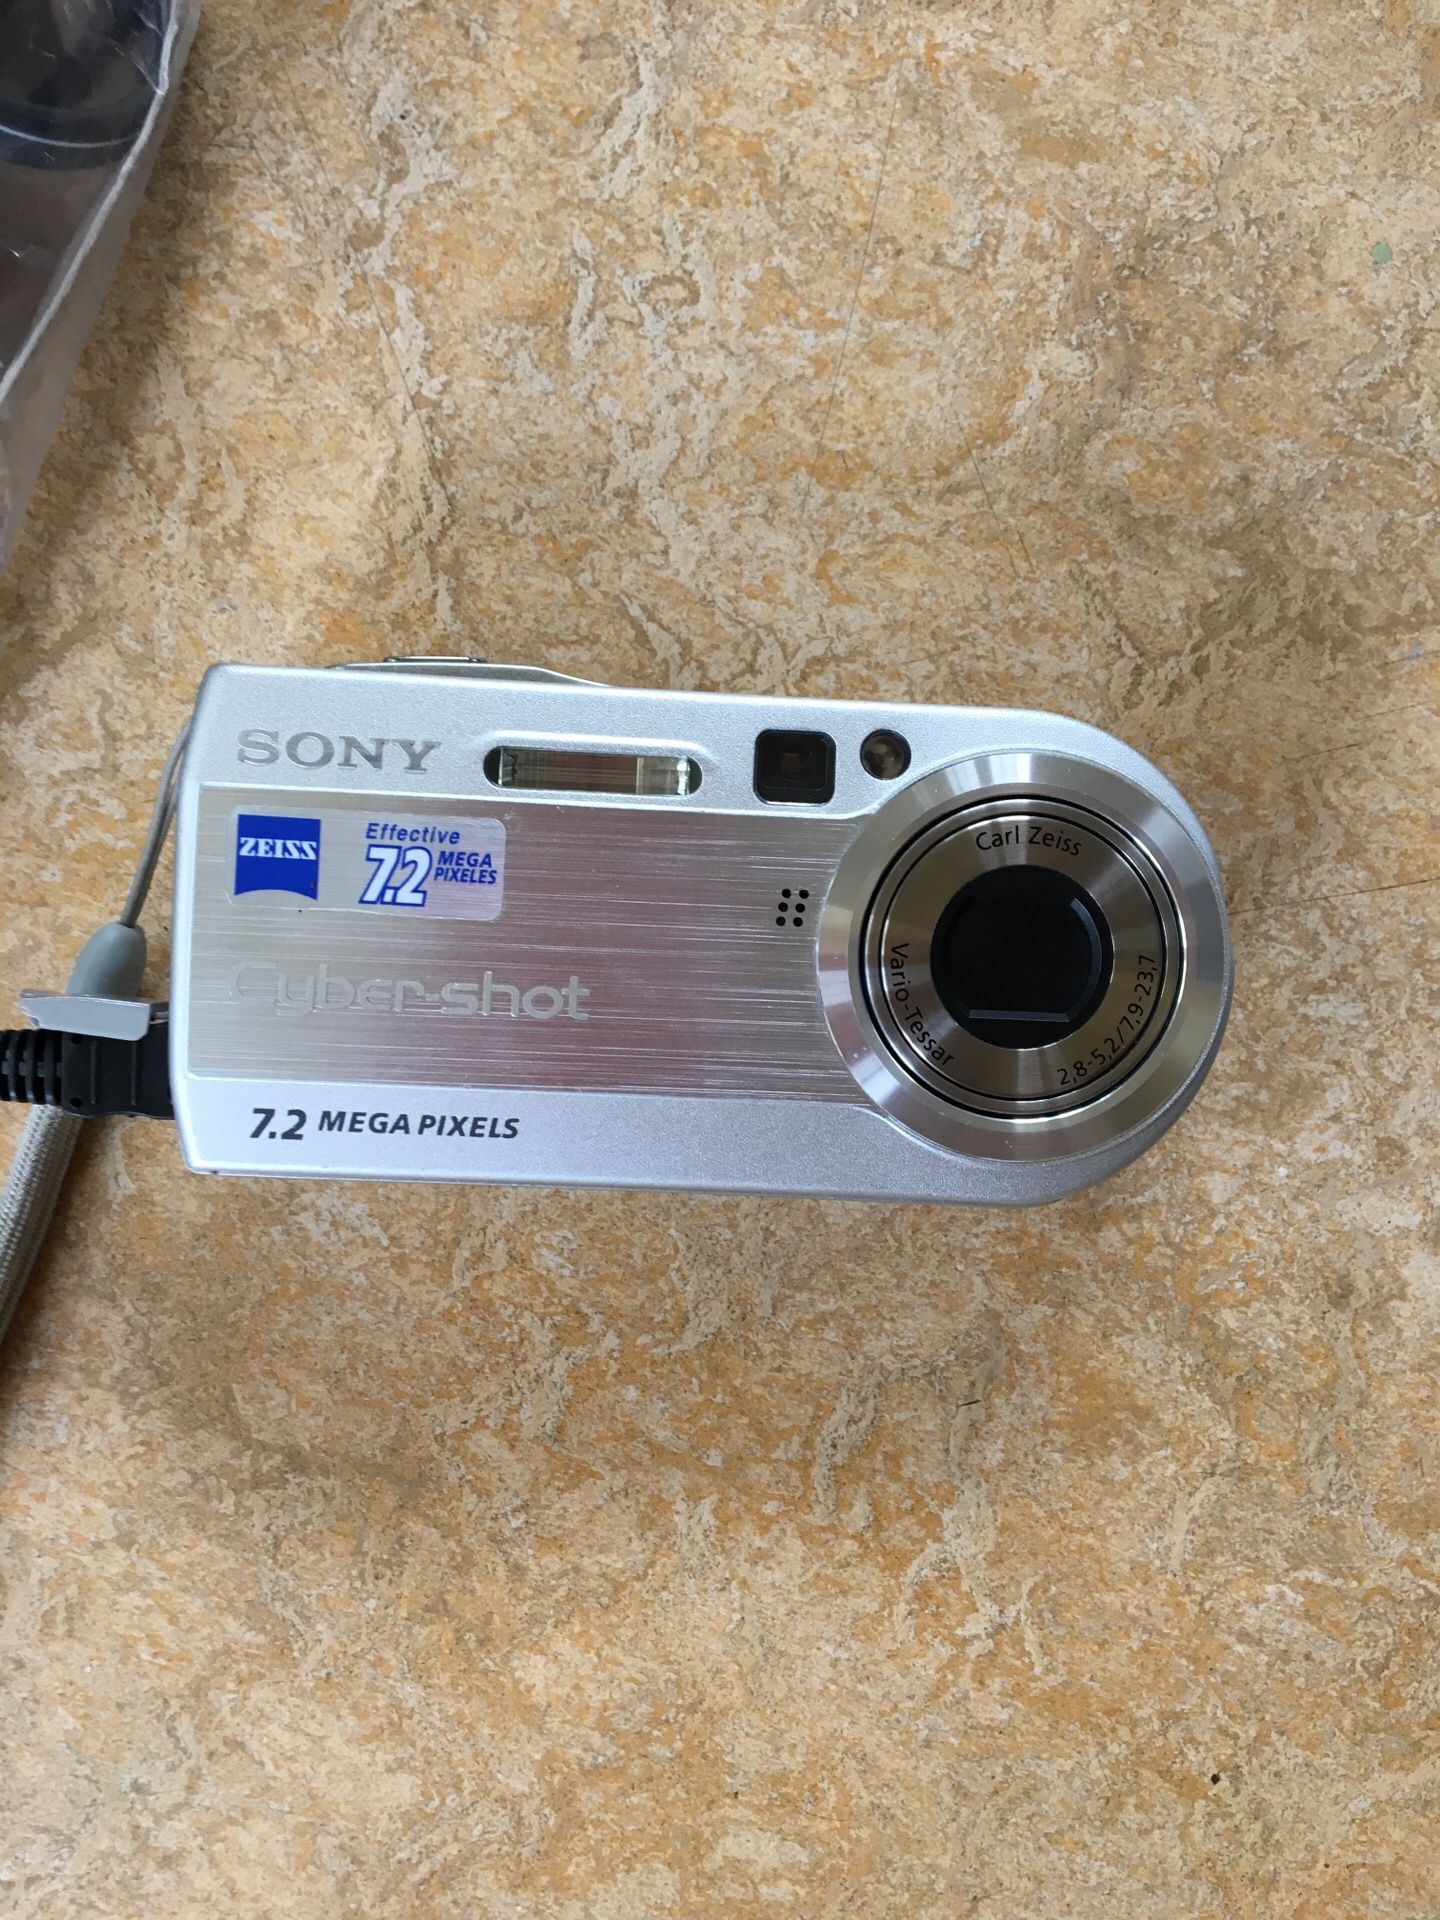 Sony cyber shot digital camera DSC-P150